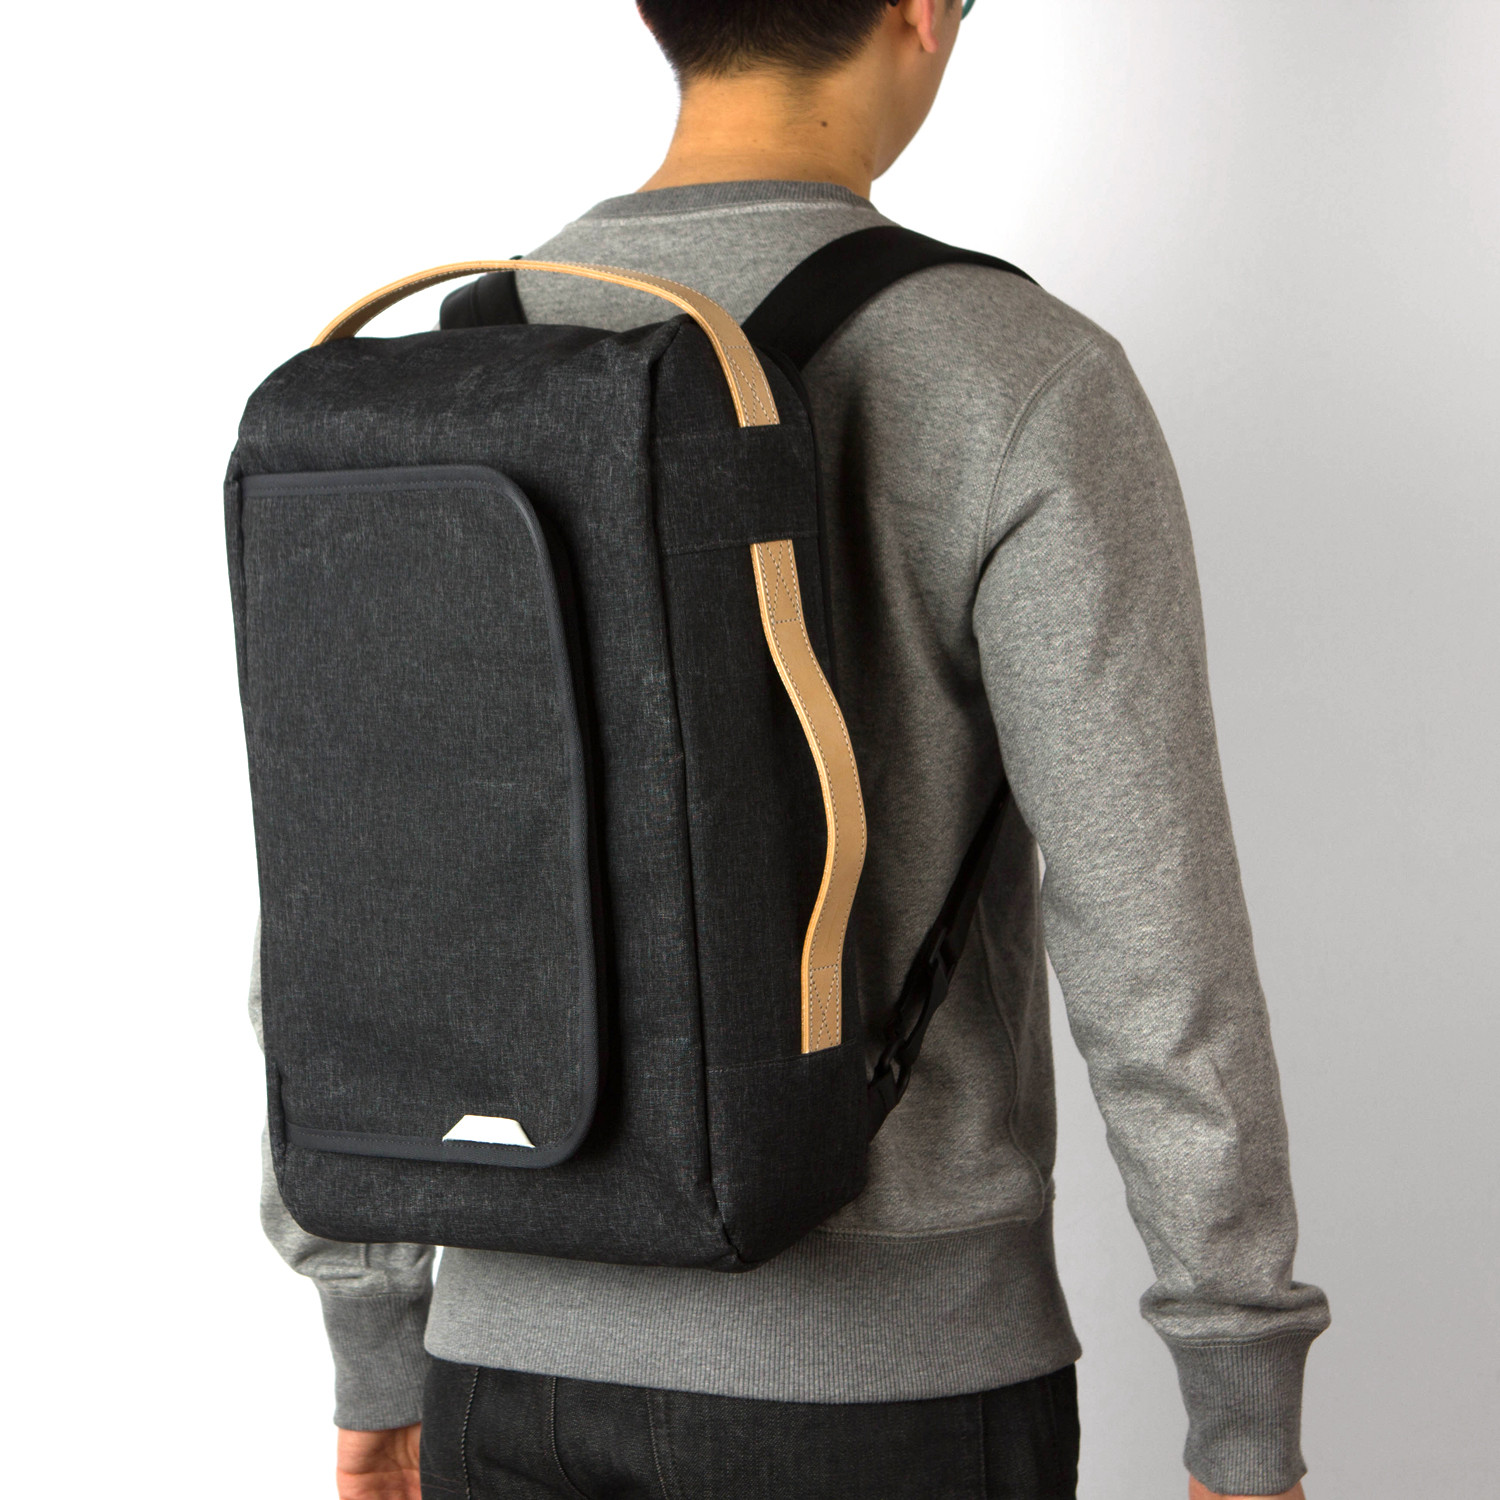 Signature Laptop Backpack 101 // Waxed Kodra Nylon (Charcoal) - RawRow